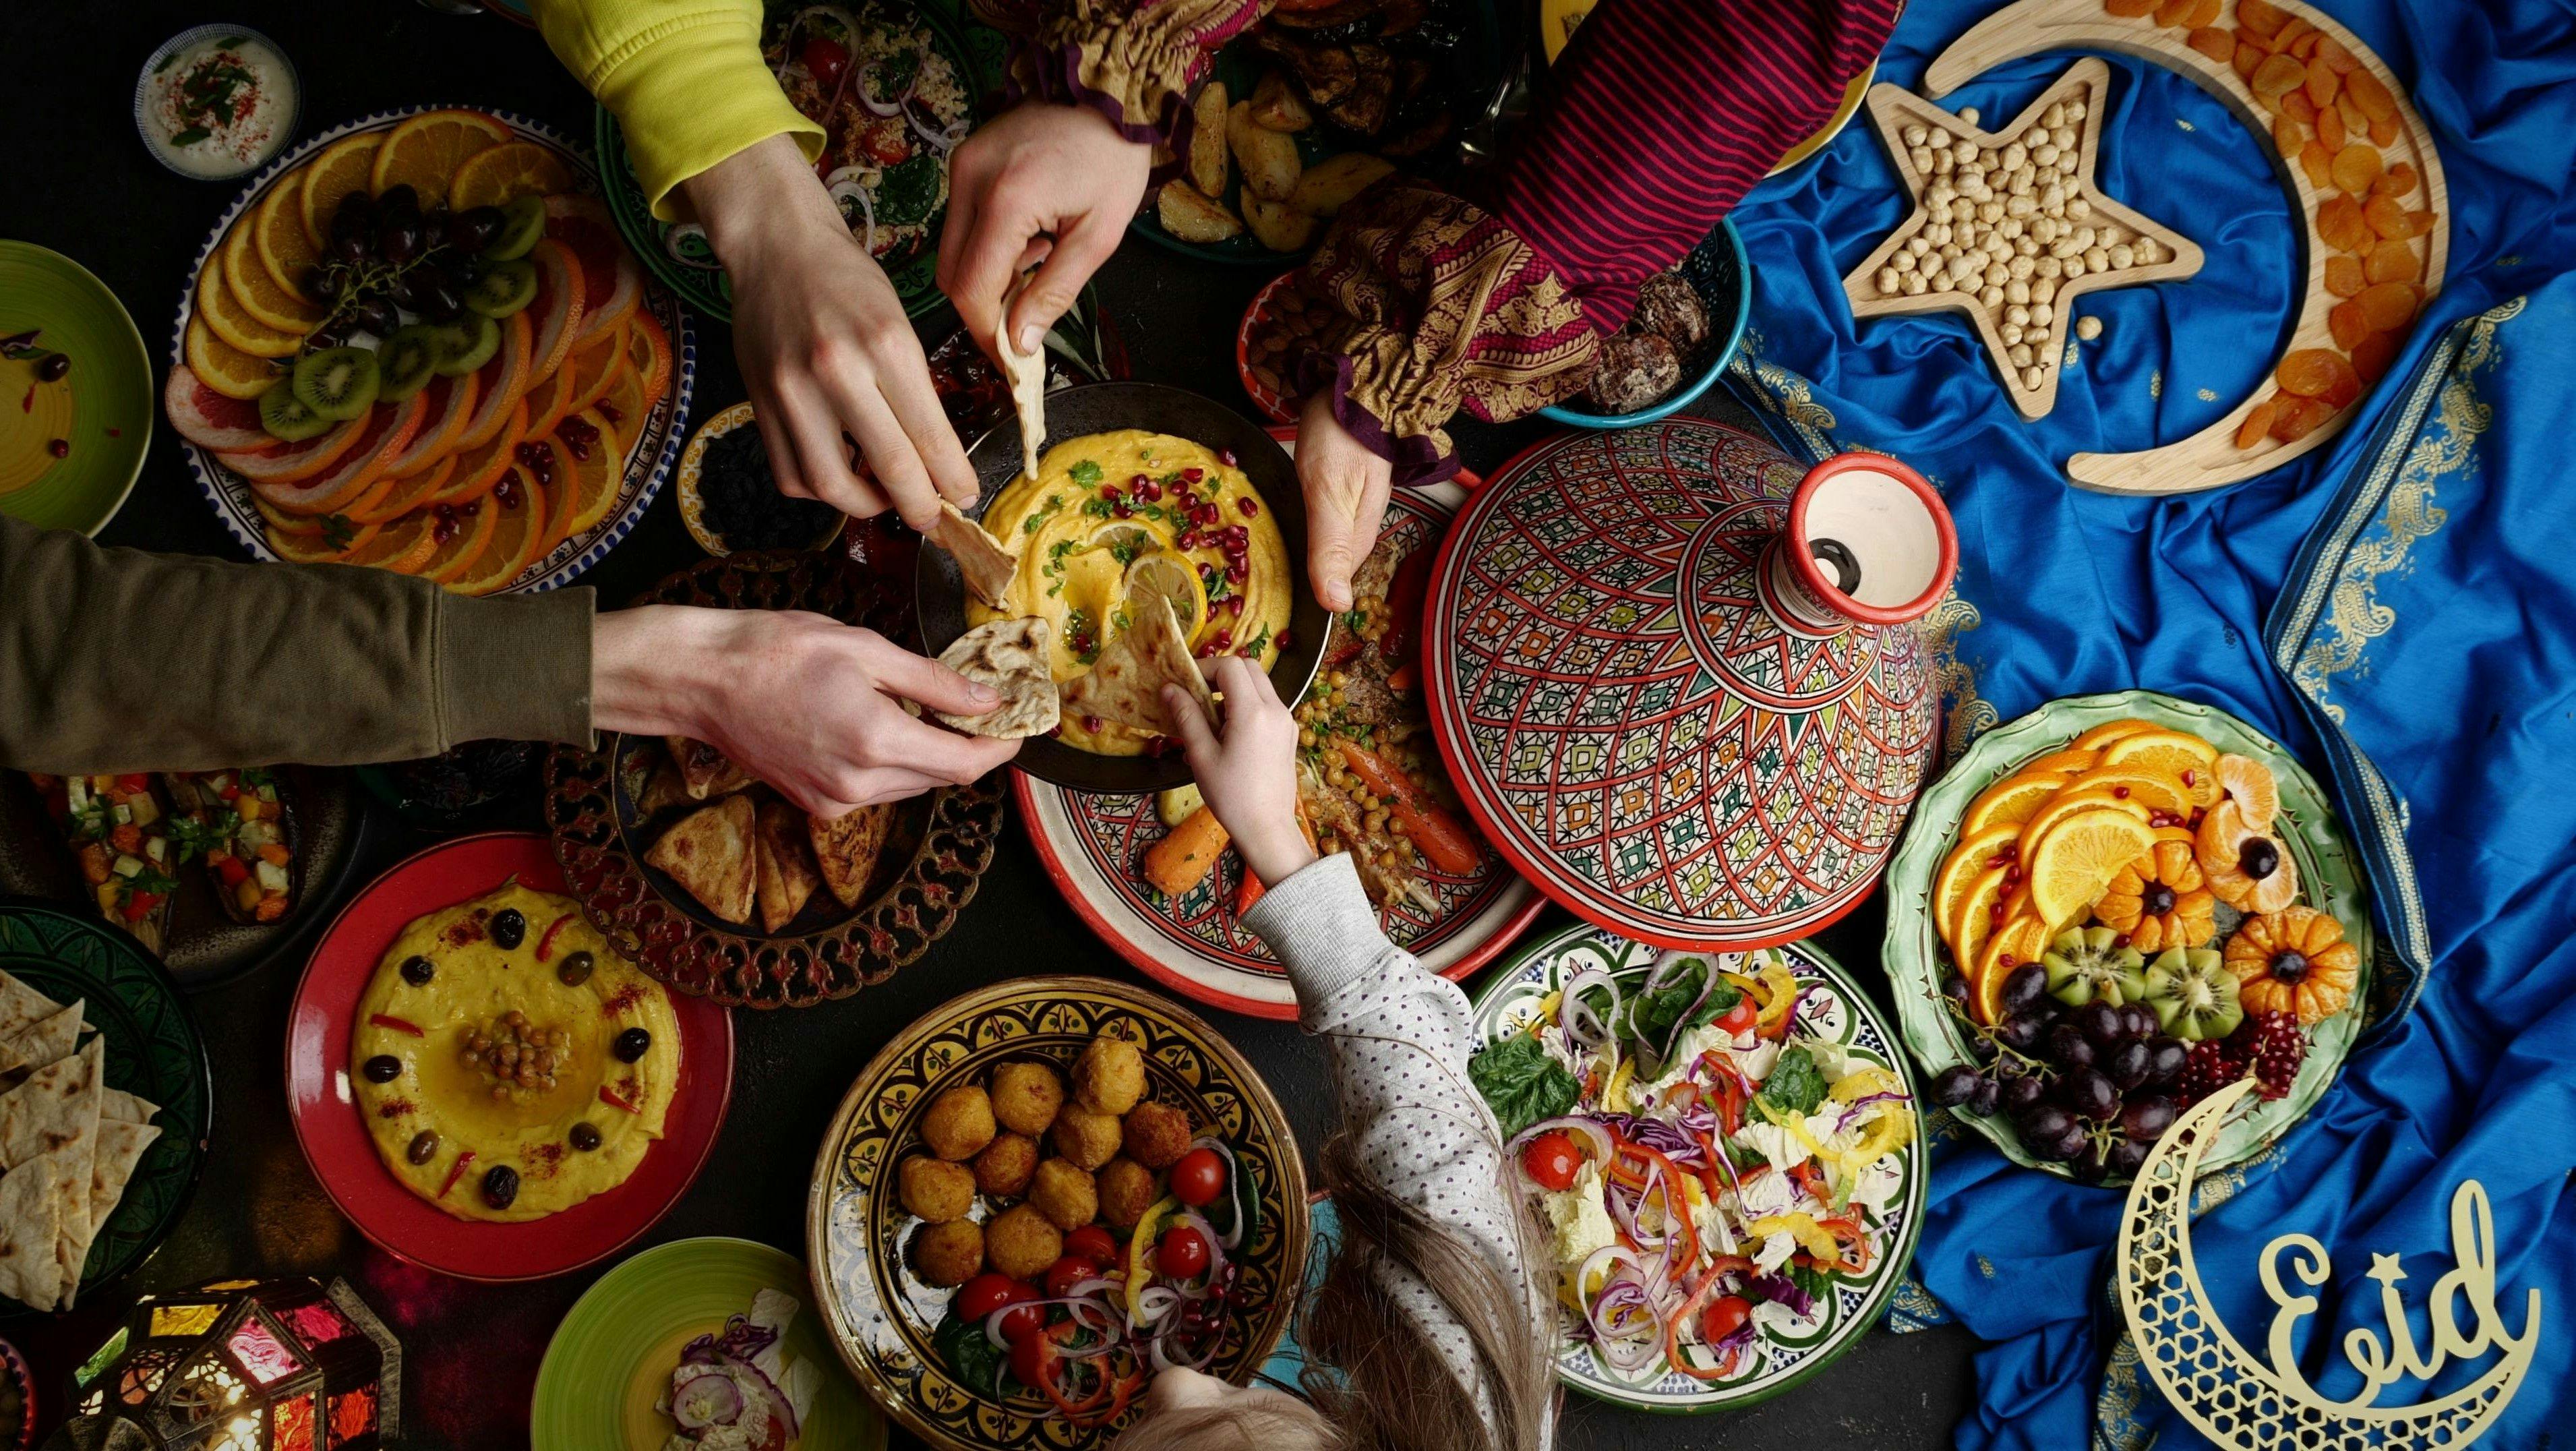 Eid holiday table. Ramadan family dinner. | Image credit: Fevziie - stock.adobe.com